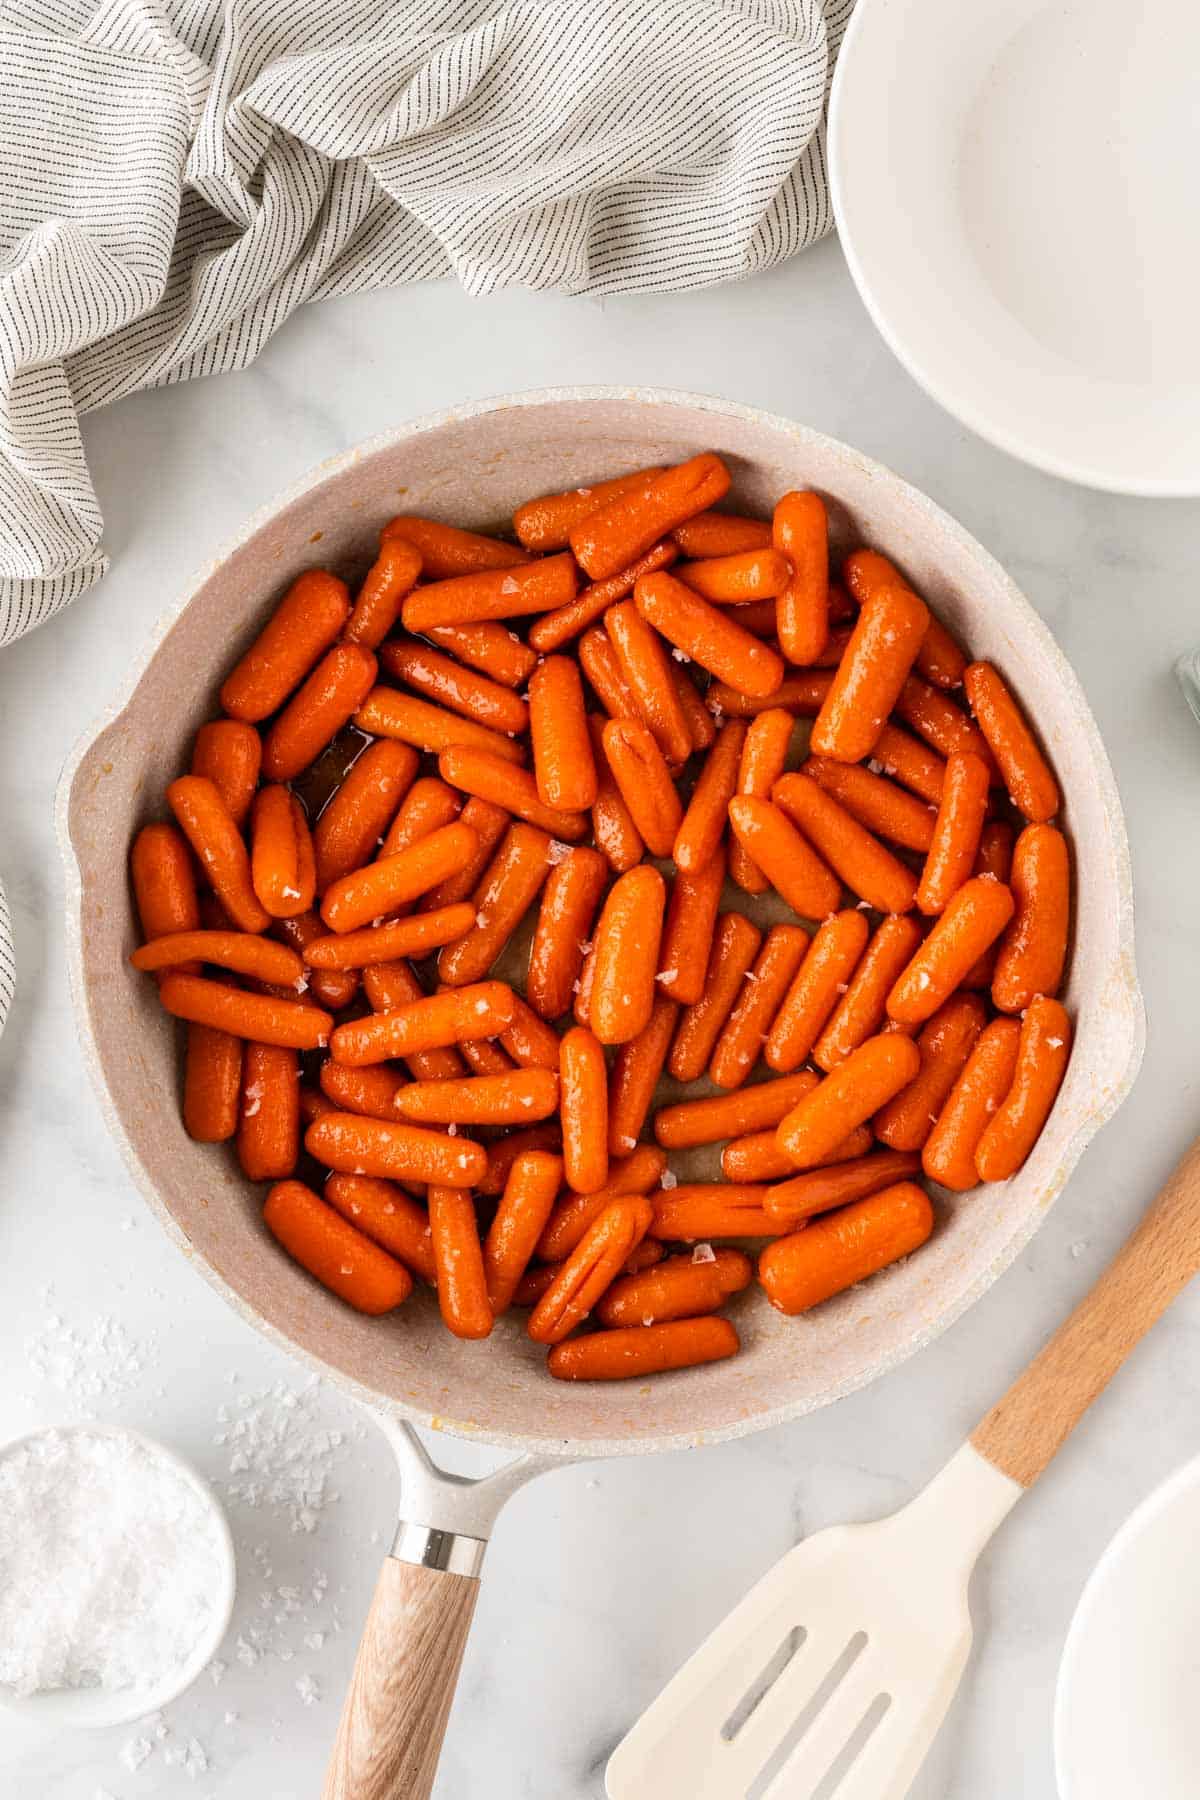 honey brown sugar glazed carrots